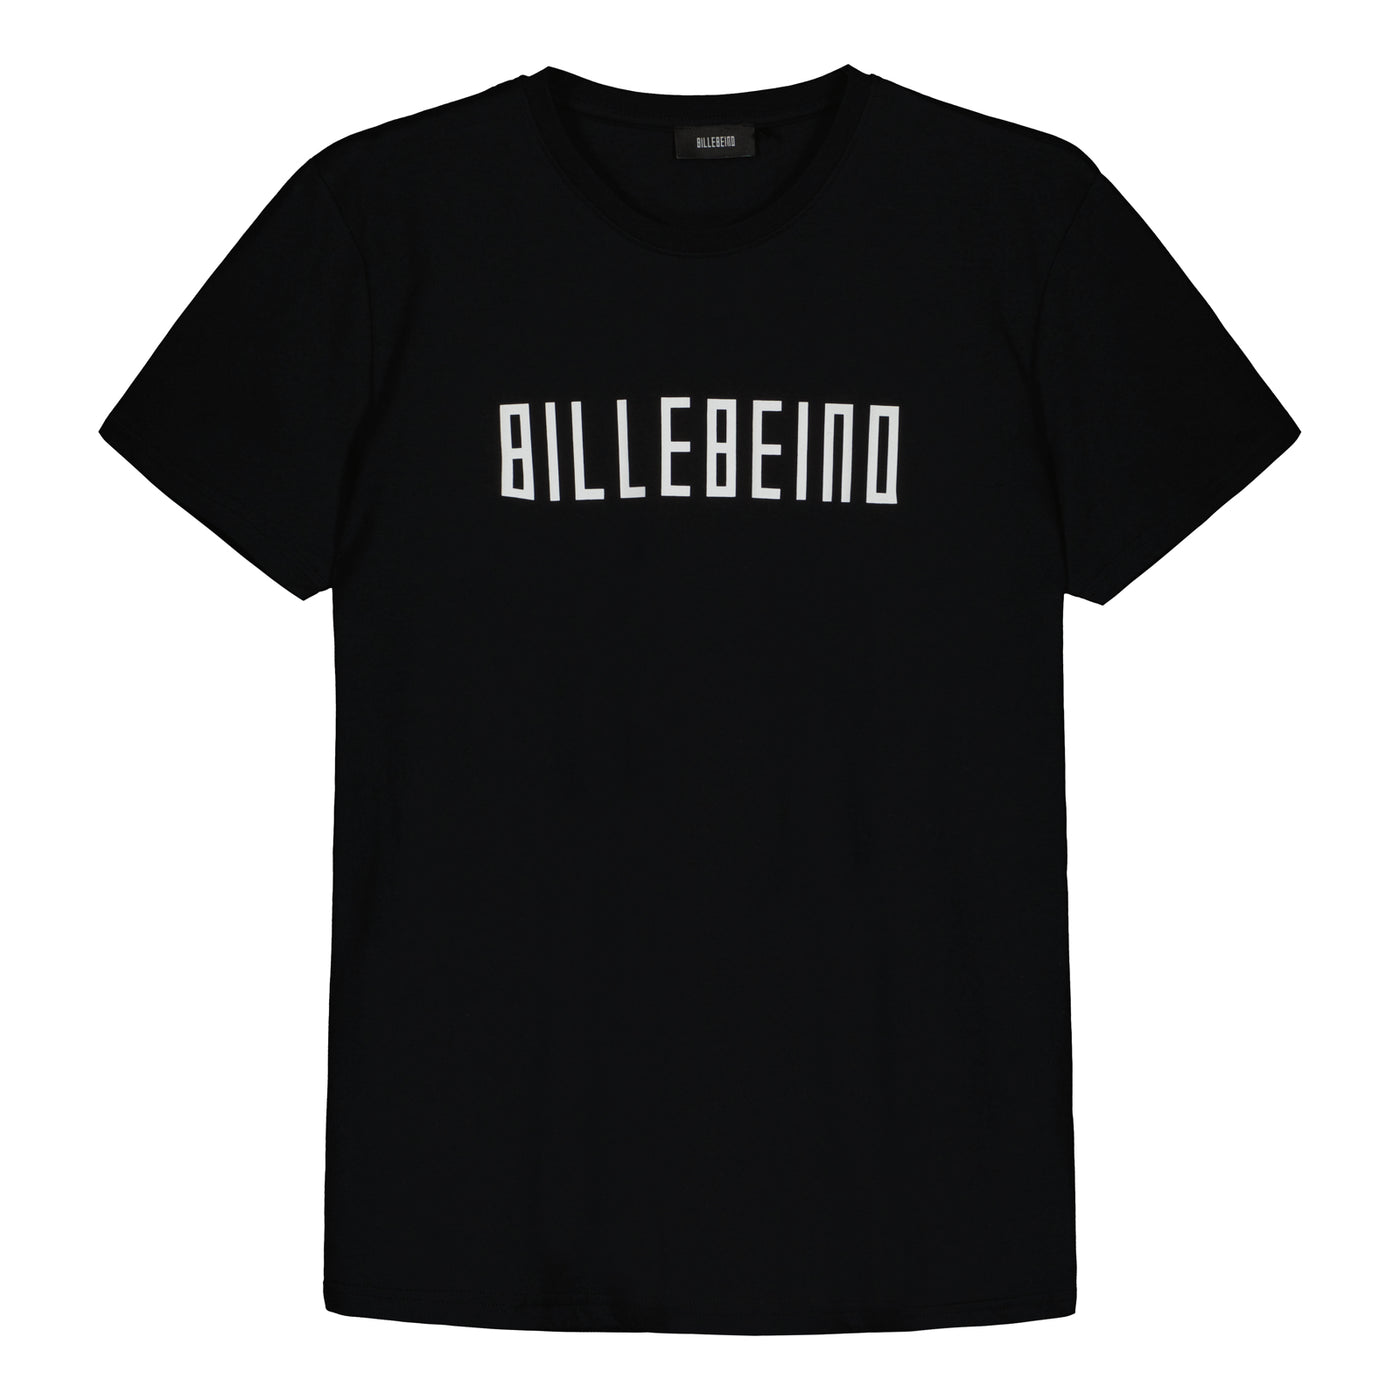 BILLEBEINO T-SHIRT